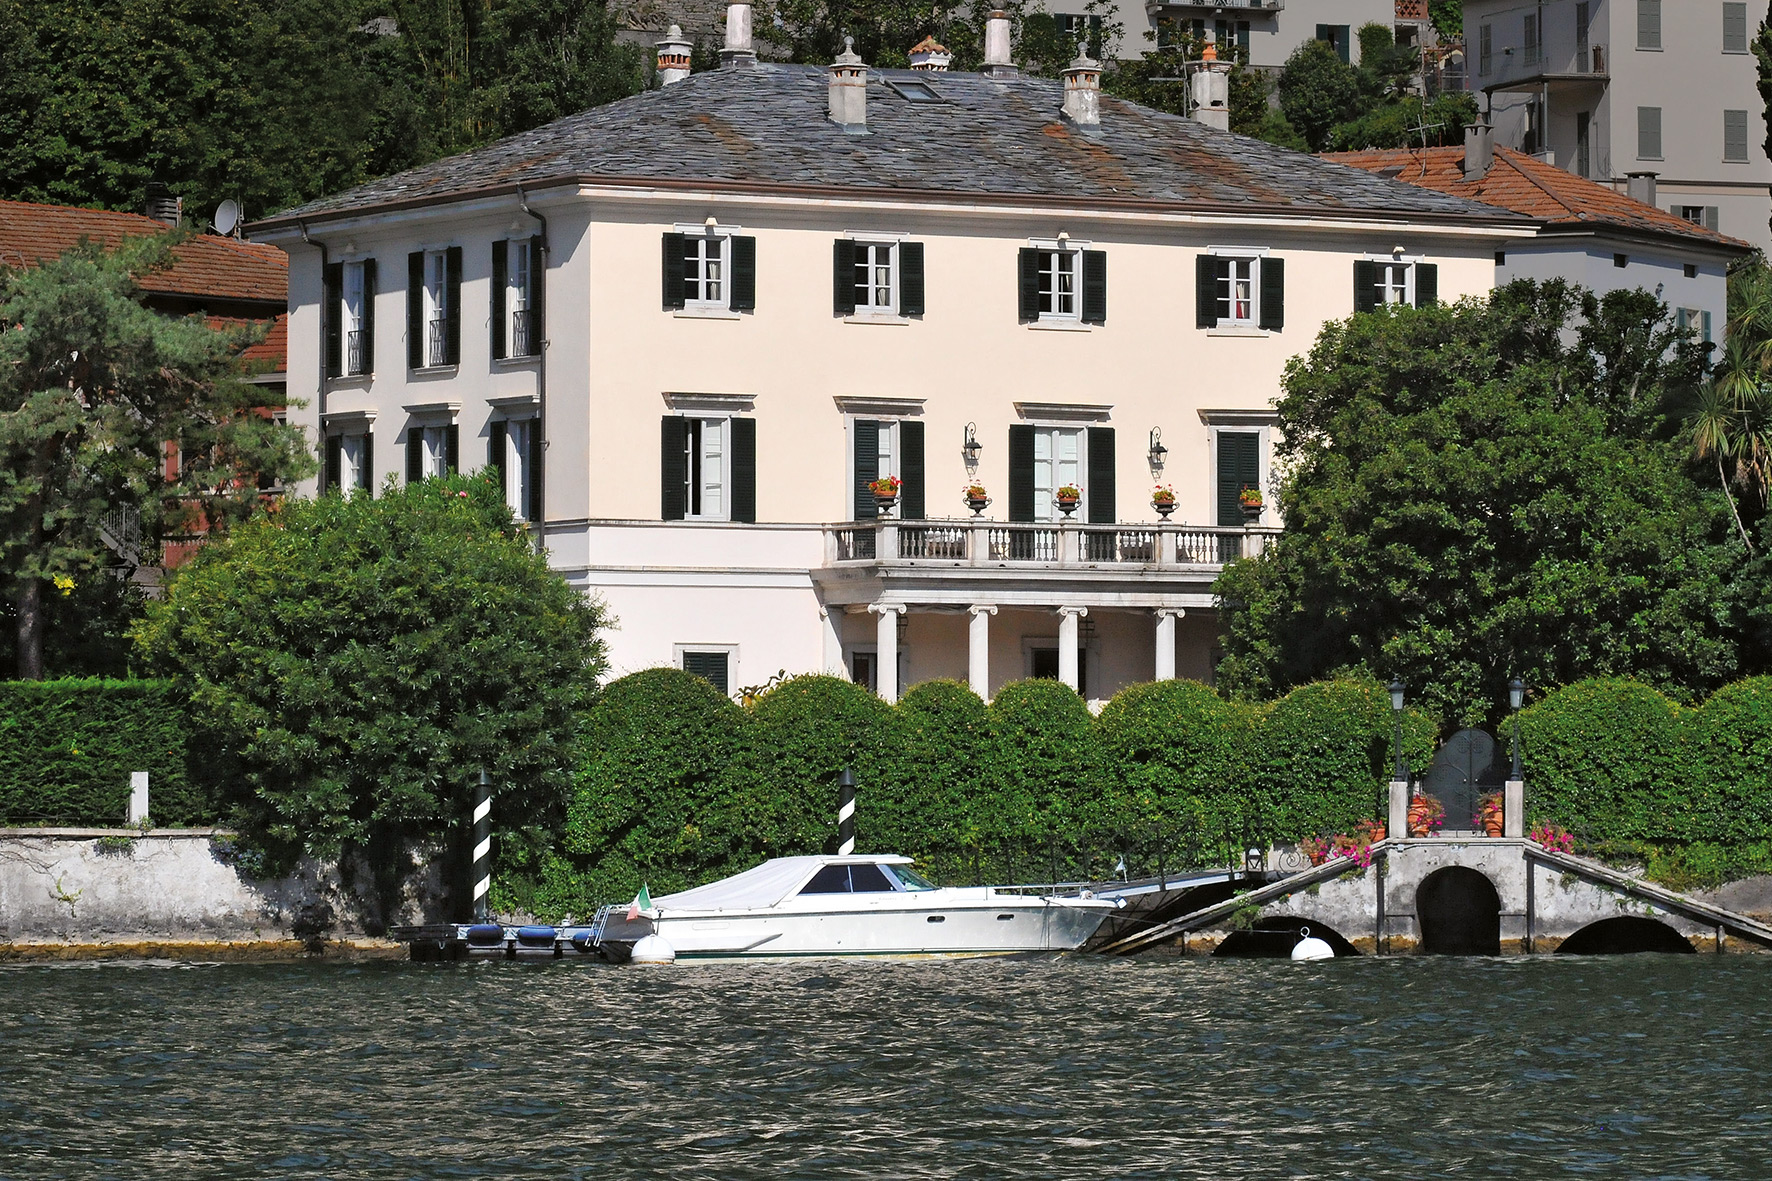 Villa Oleandra Como Lake, Official Website, George Clooney